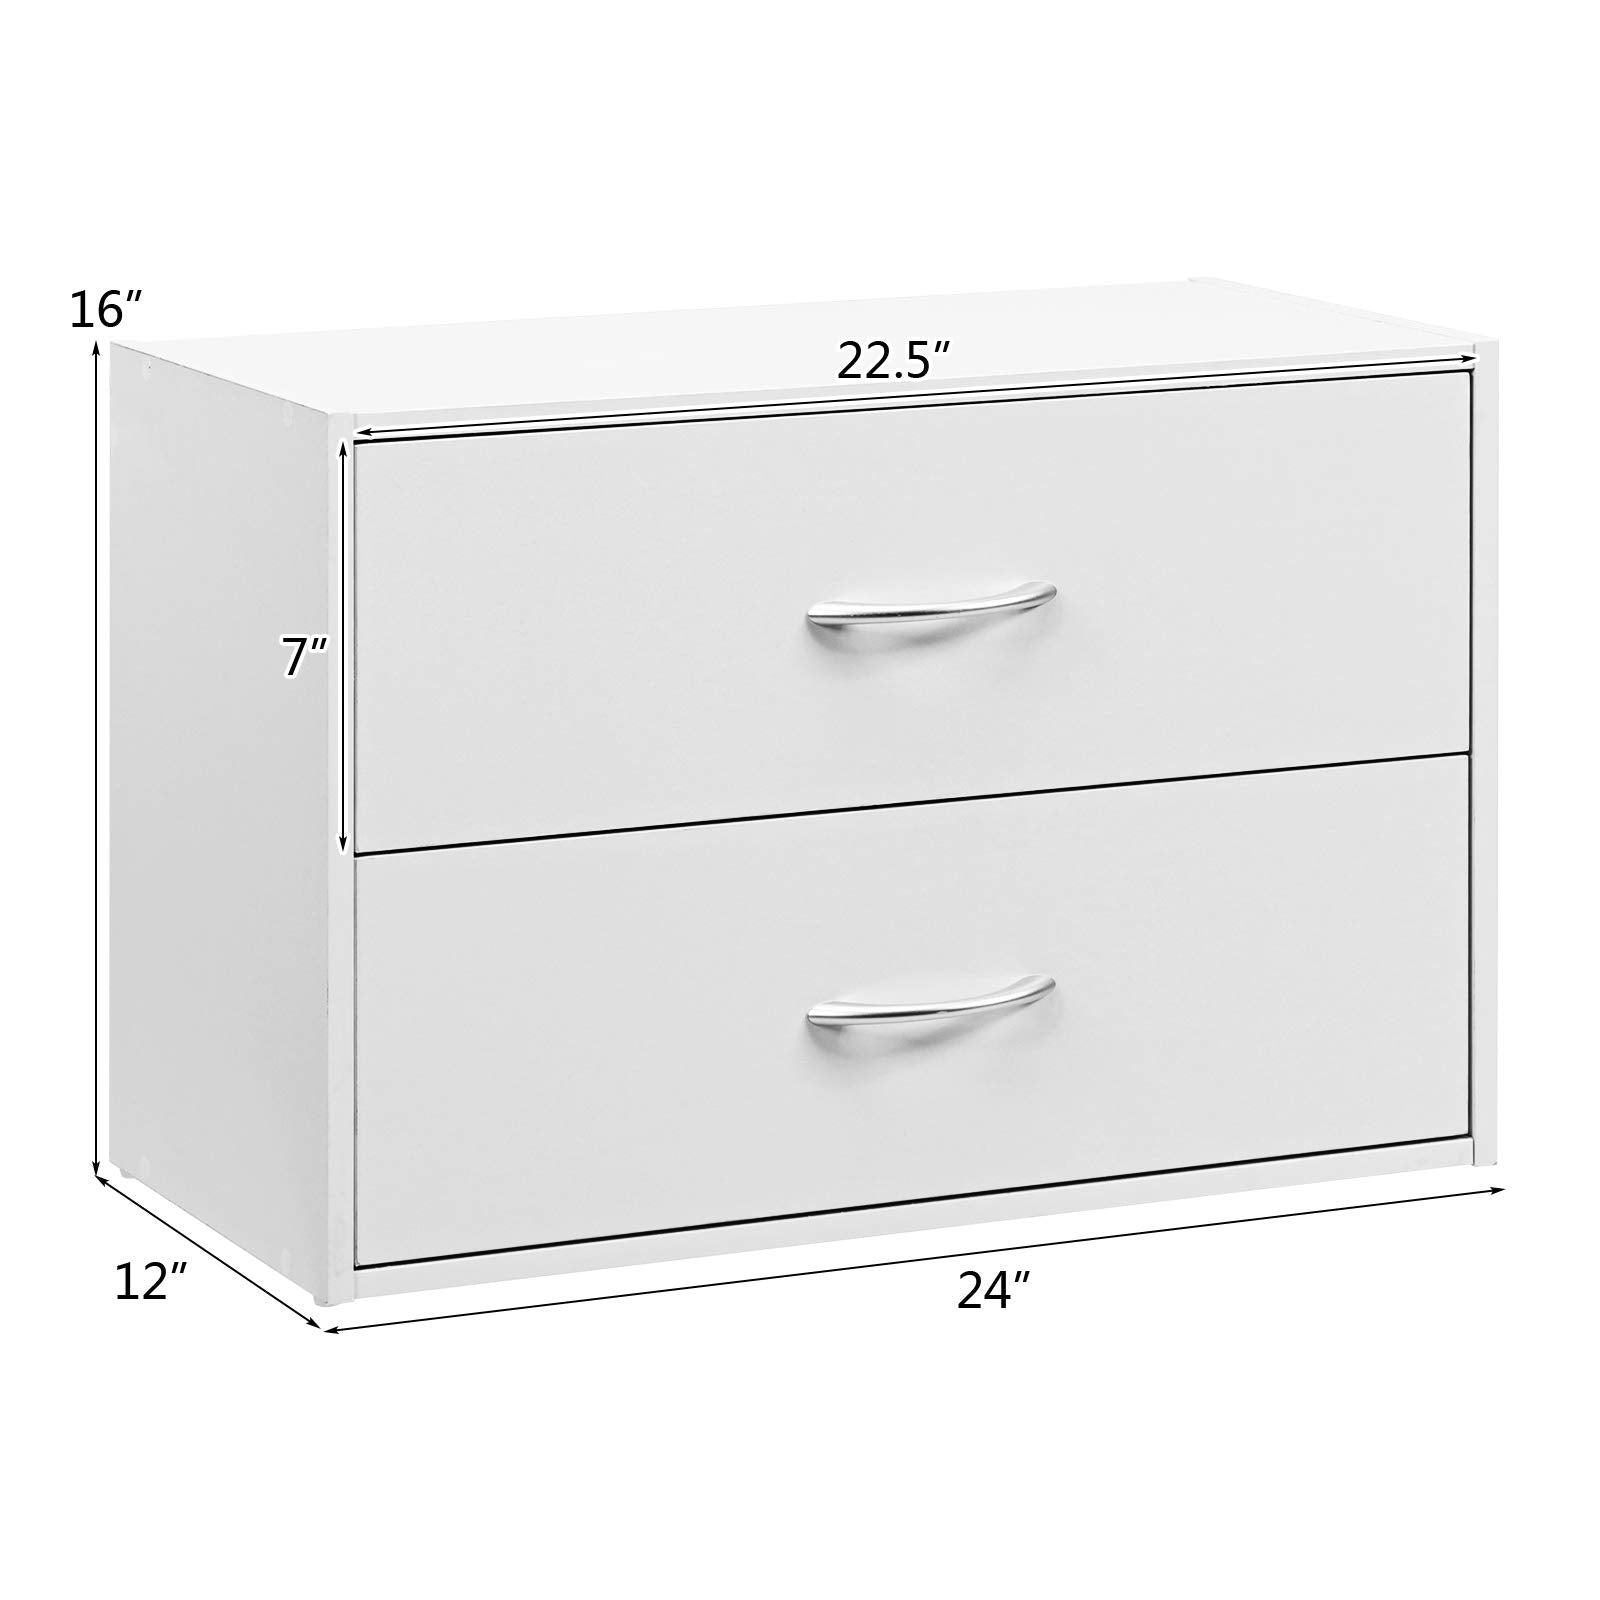 Giantex Dressers Stackable 2 Drawer Horiztonal Organizer W/Handles Dresser Tower, White